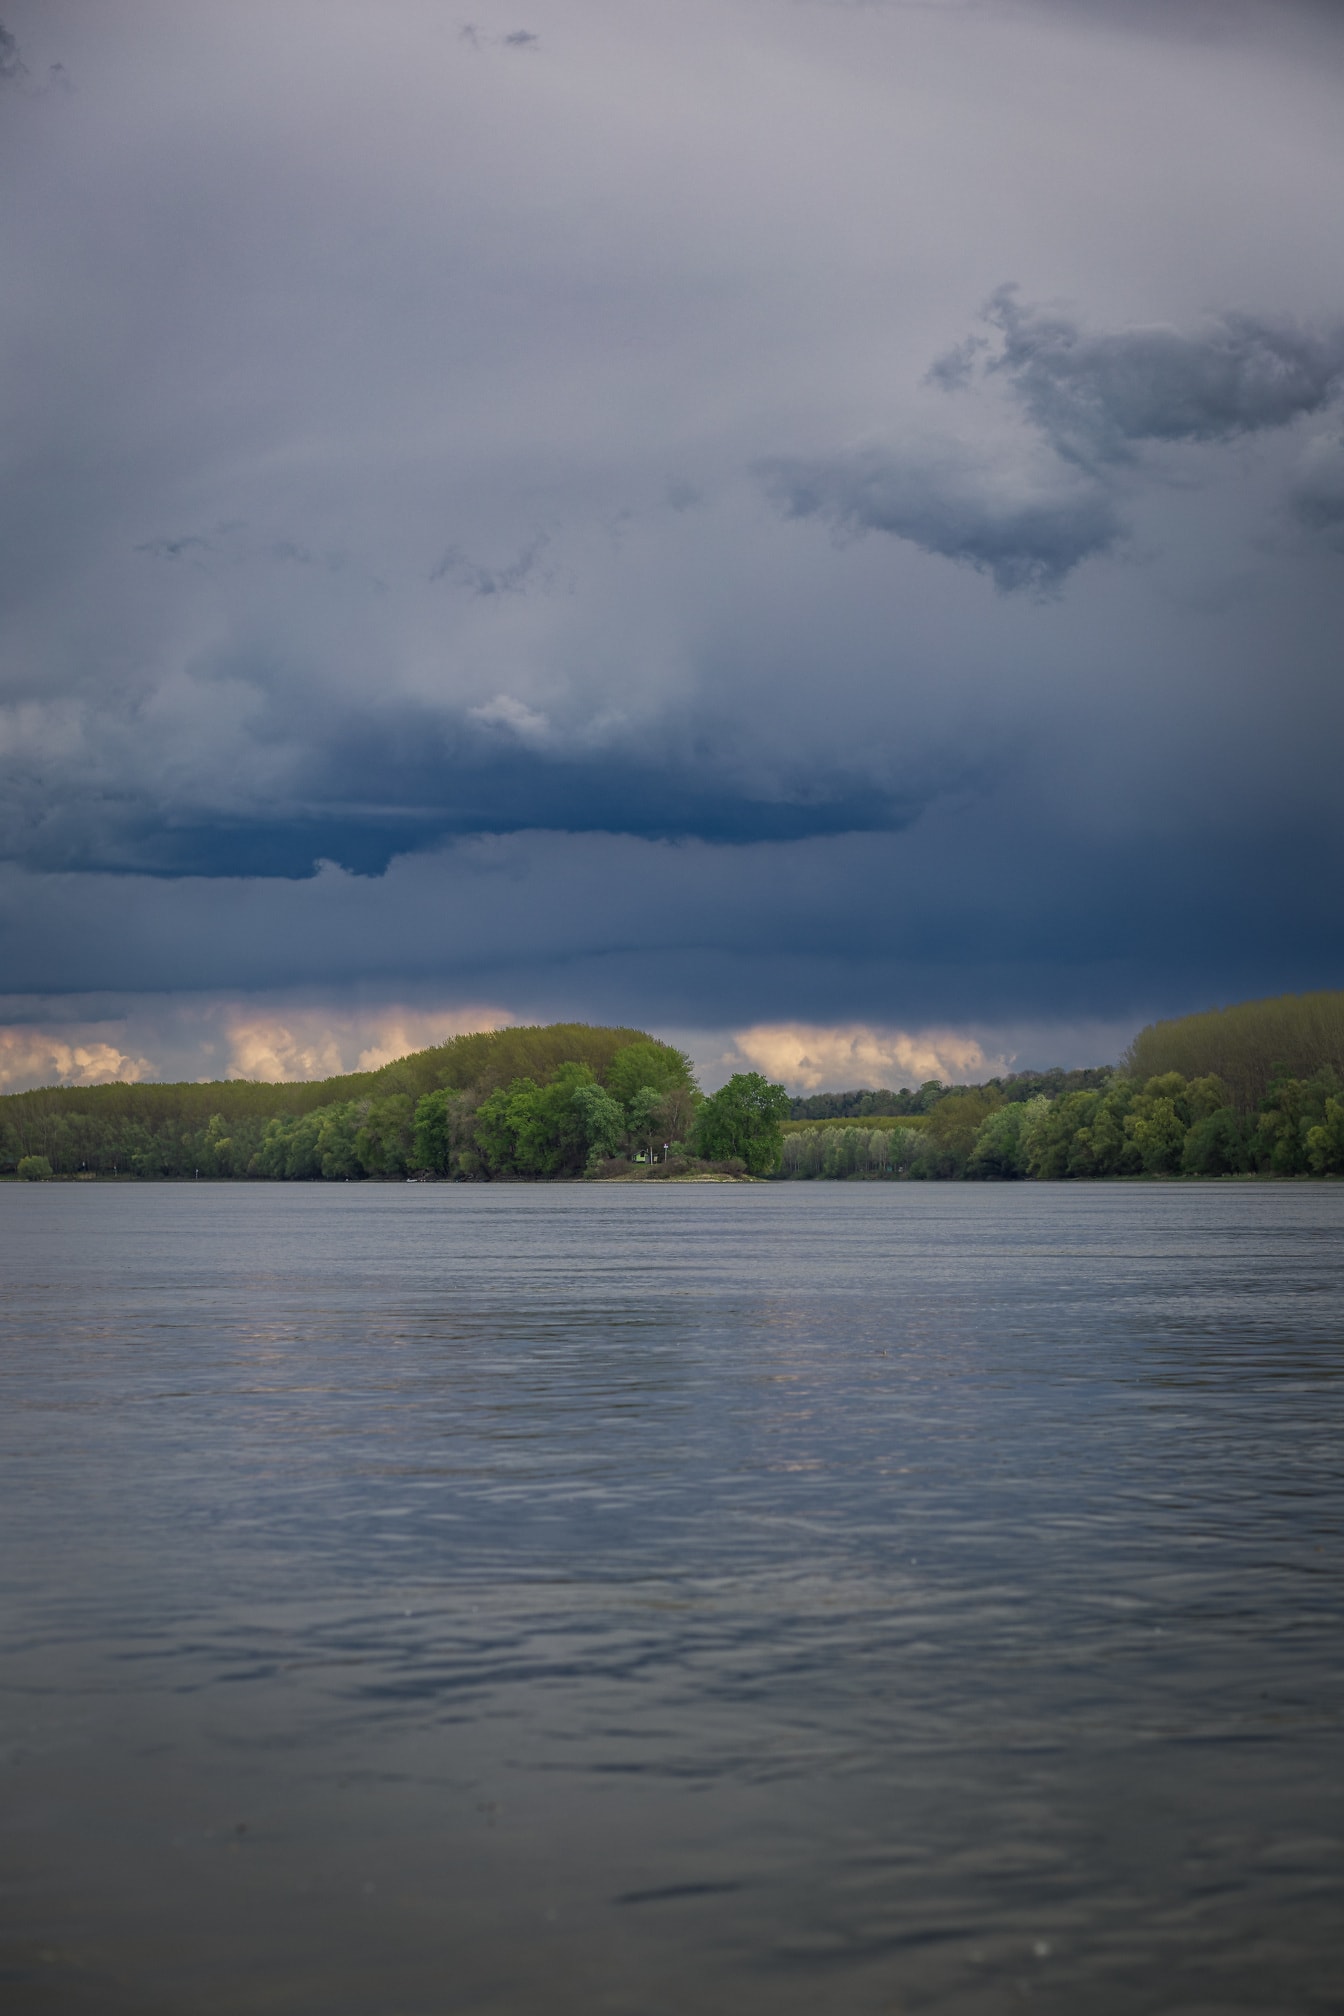 Nubi di tempesta blu scuro sul fiume Danubio